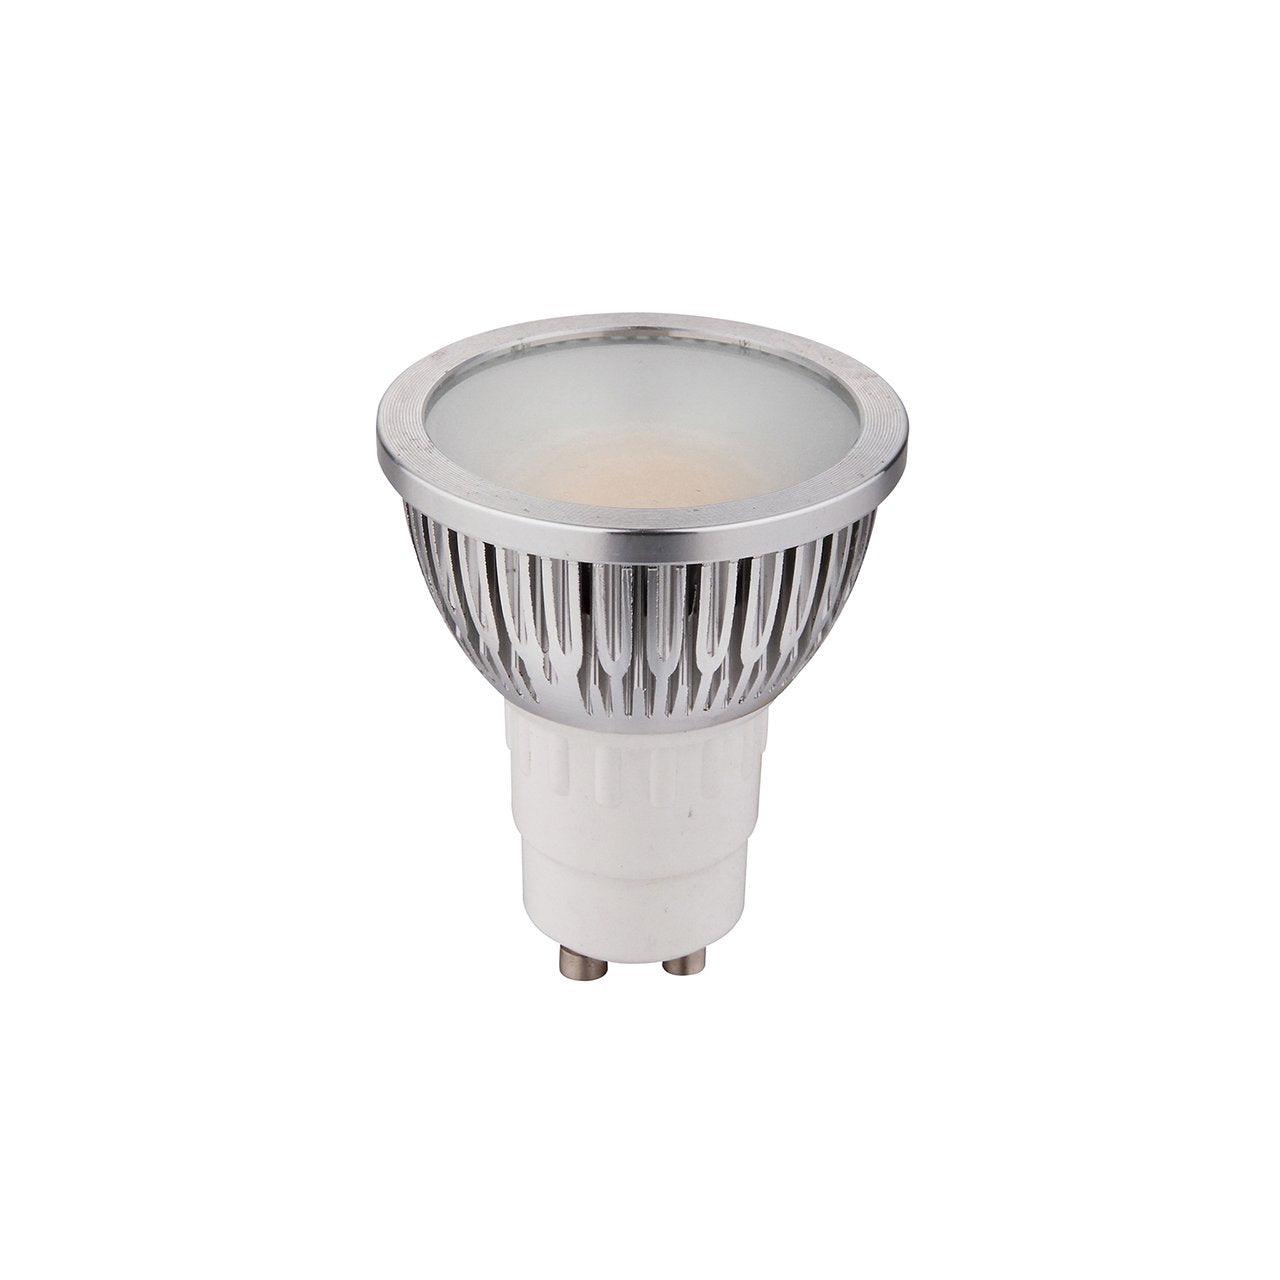 Havit Lighting LED Globes HV9555C / White HV9555 - 5w GU10 LED Globe with beautiful design by Havit Lighting HV9555C